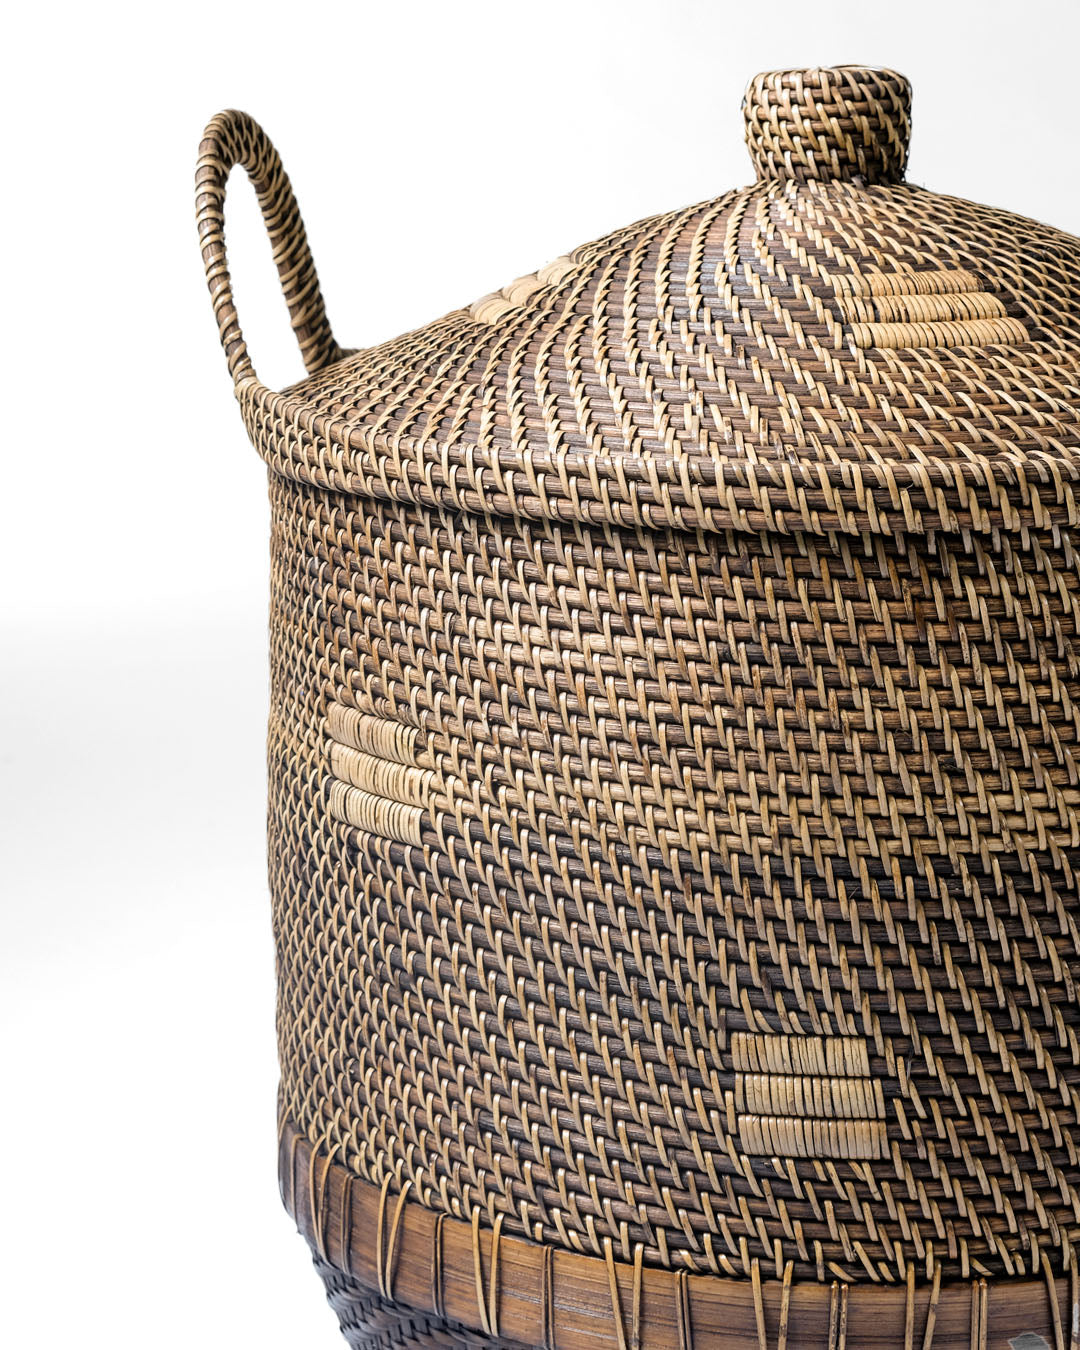 Sumba rattan basket with lid 52 H